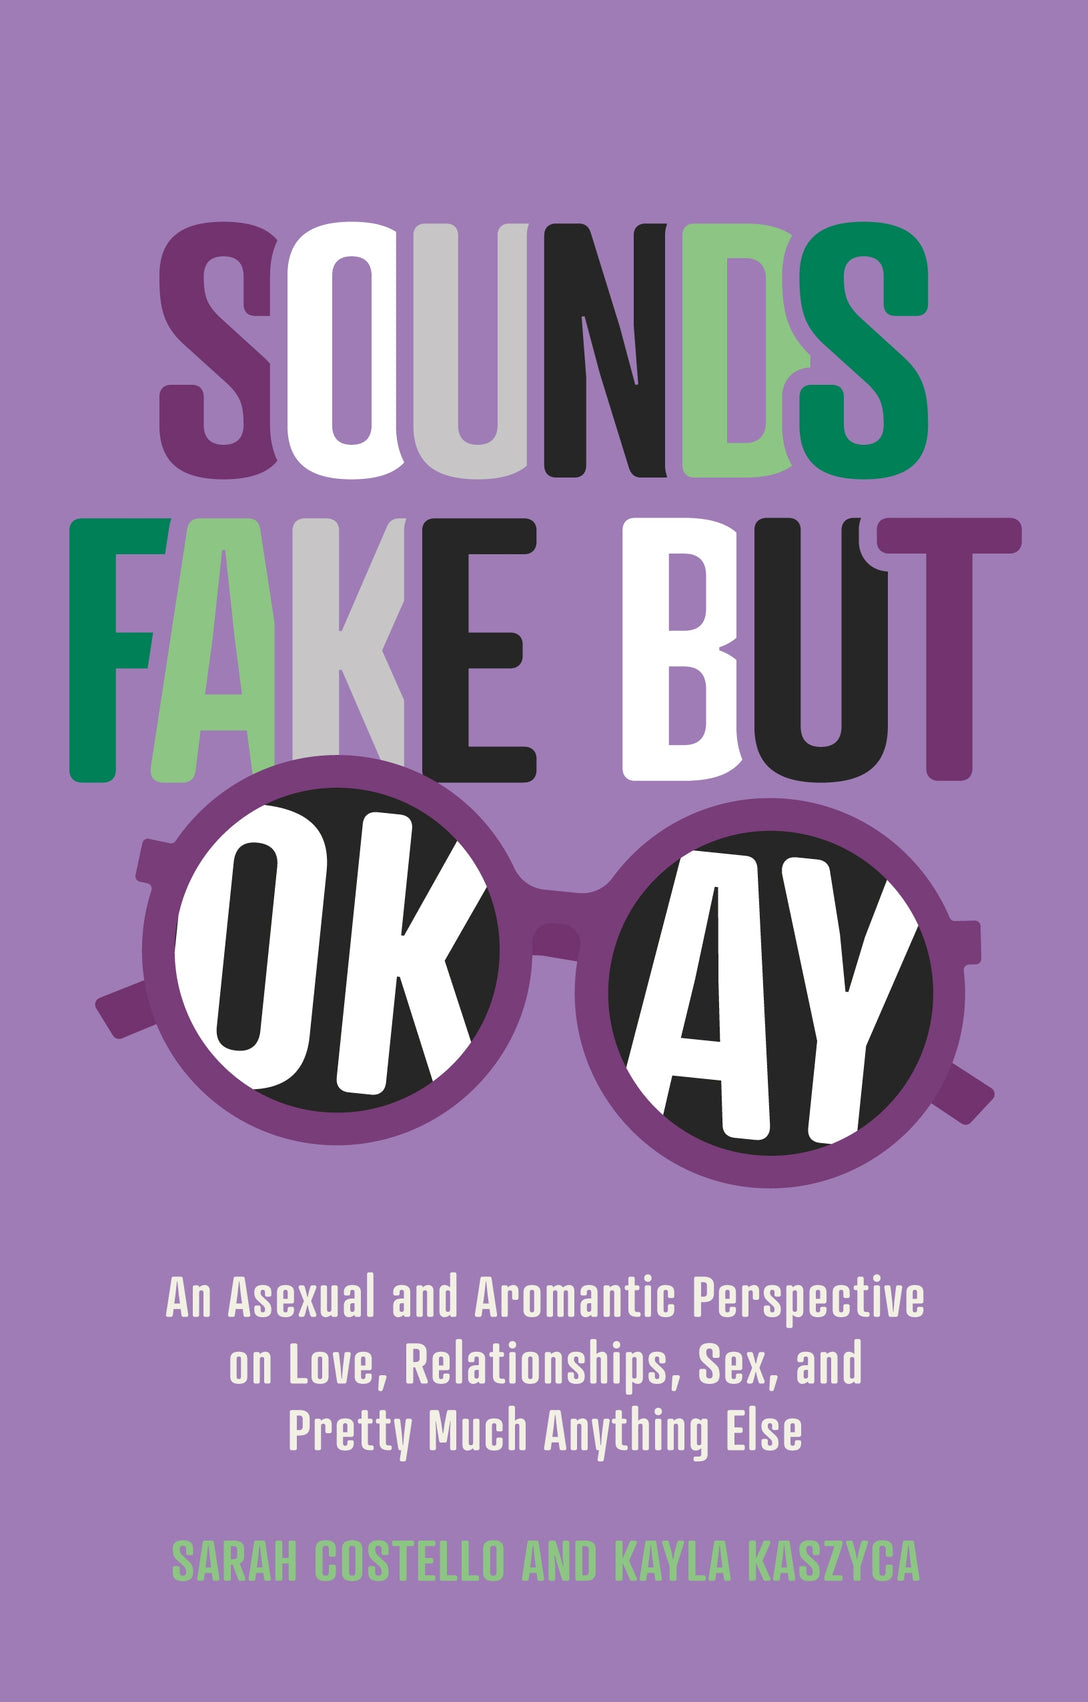 Sounds Fake But Okay by Sarah Costello, Kayla Kaszyca